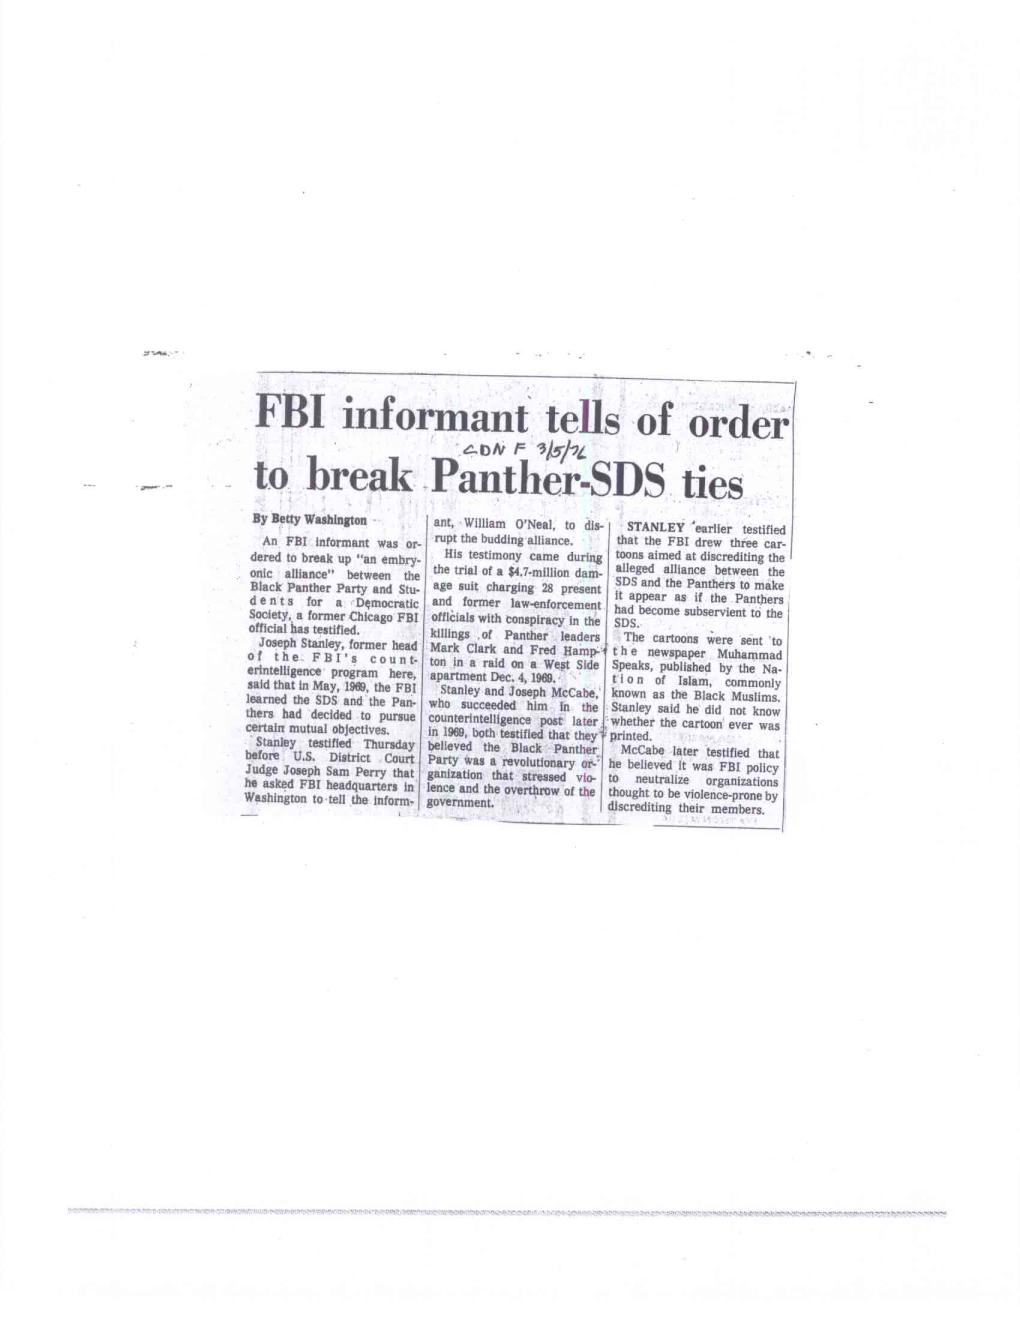 FBI Informant Tells of Order to Break Panther-SDS Ties